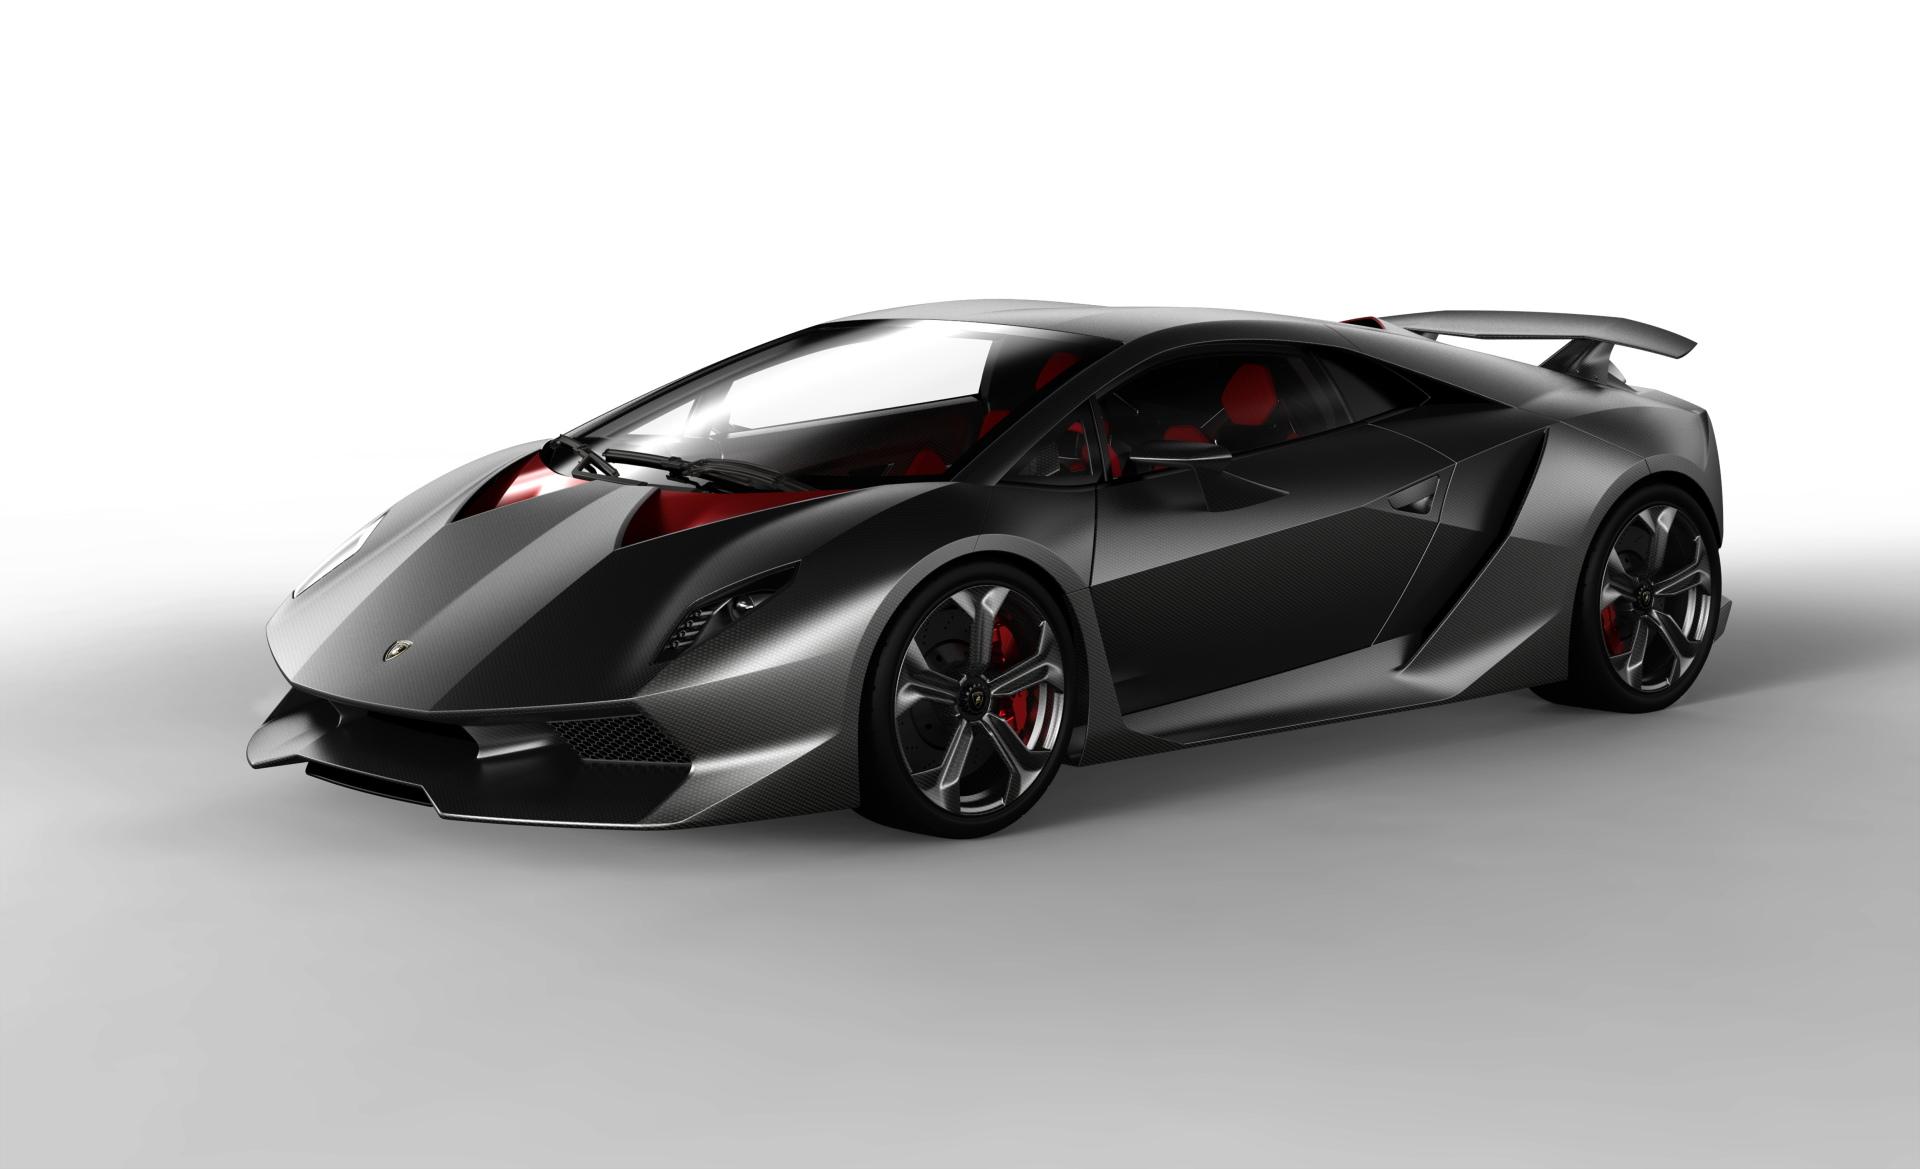 Lamborghini Sesto Elemento at 2048 x 2048 iPad size wallpapers HD quality